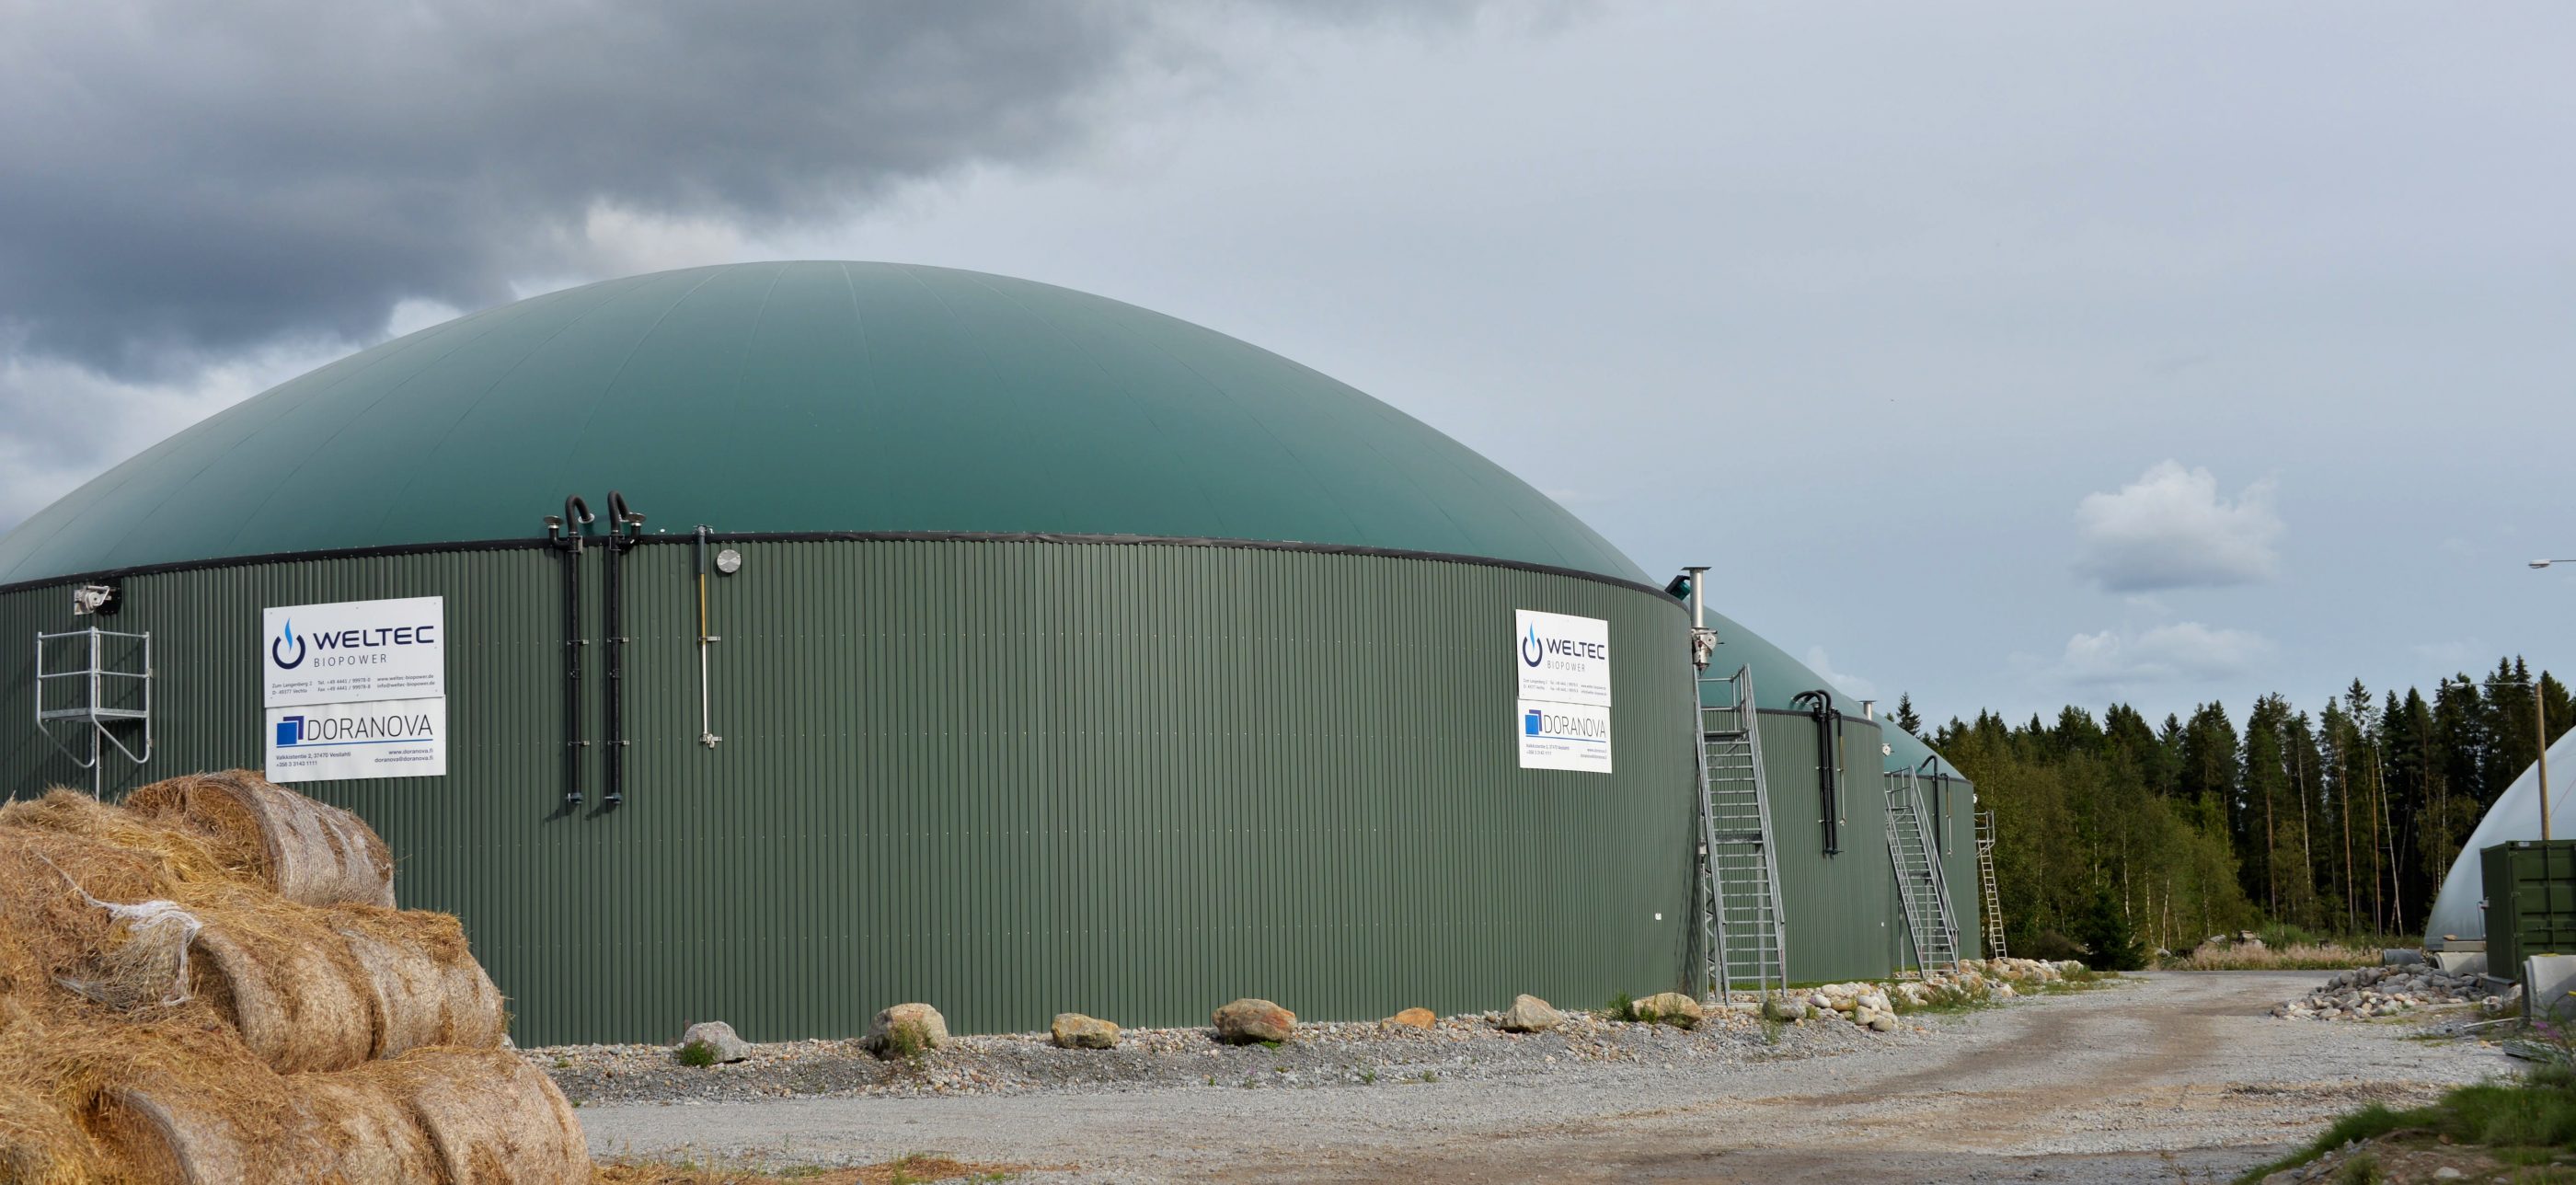 Snellman ersatte oljan med biogas